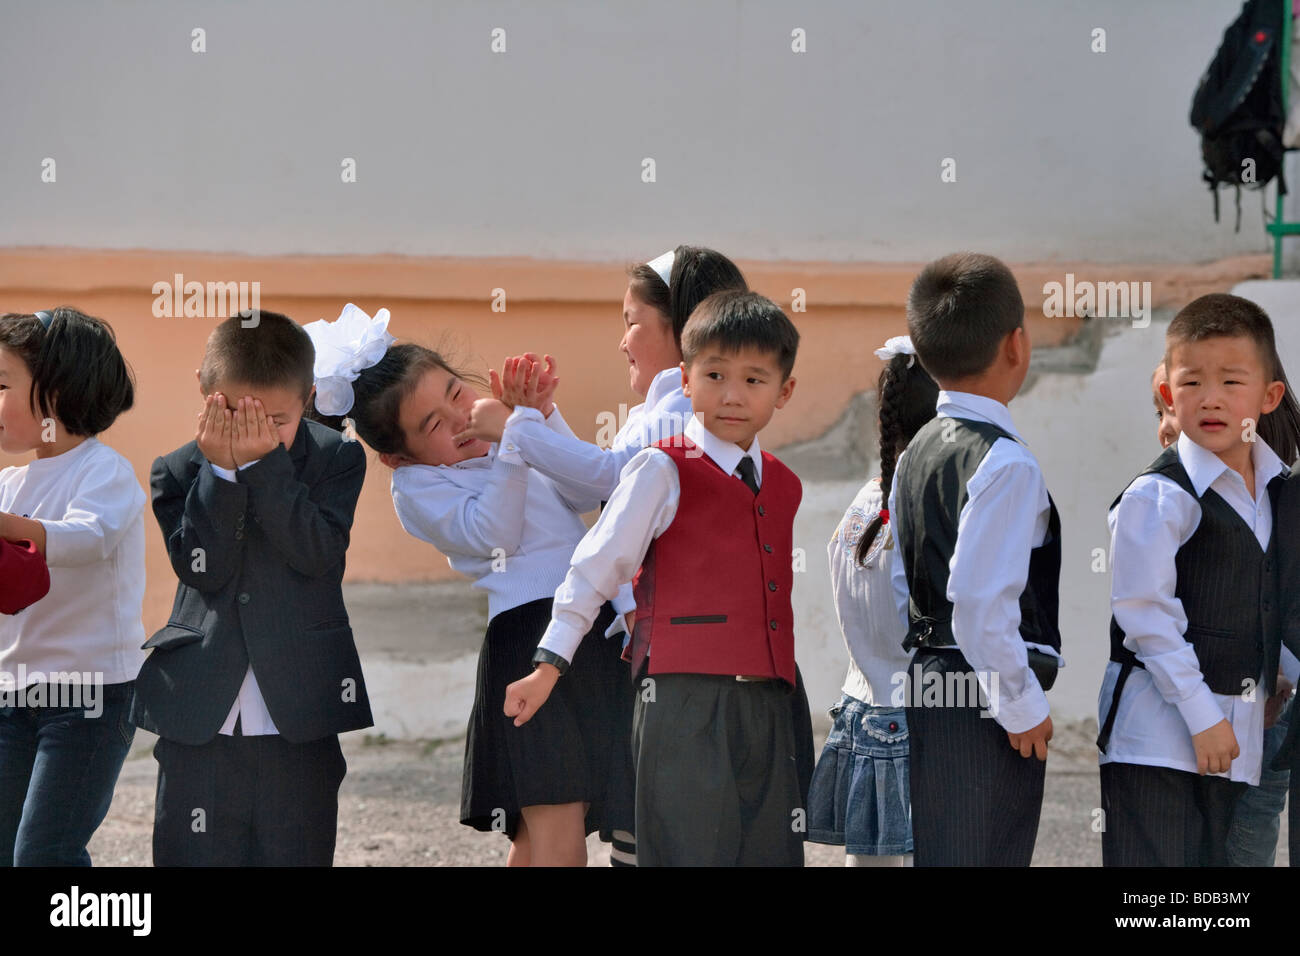 Mongolian schoolchildren play while queued in a line, Ulaan Baatar, Mongolia Stock Photo